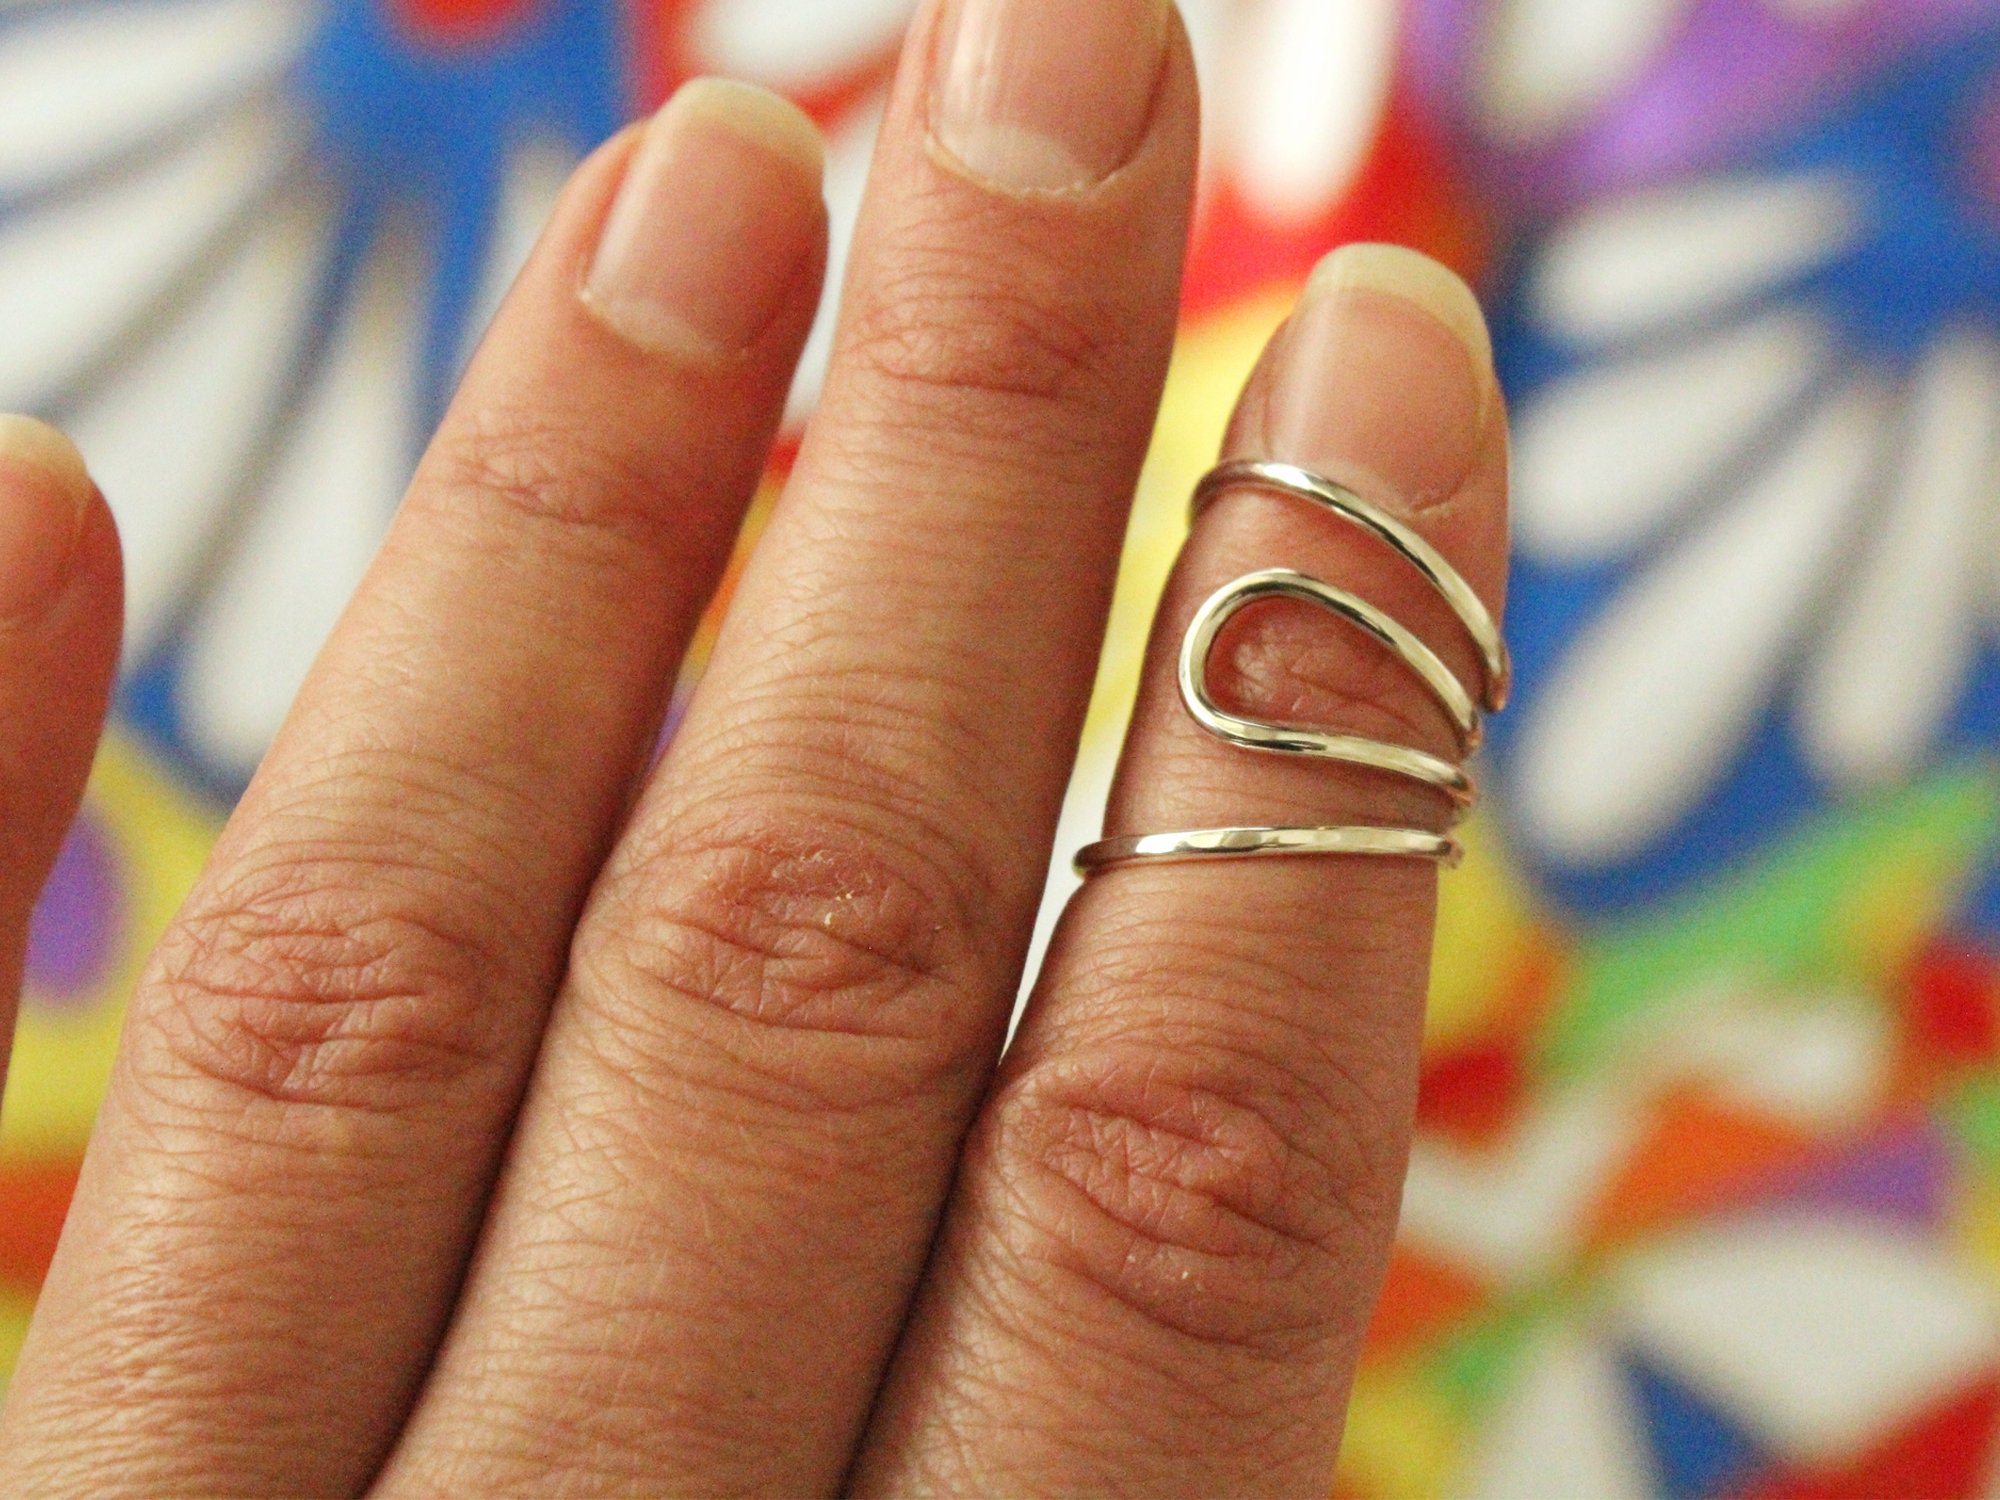 Buy Swan Neck Silver Ring Splint Set of 5 Online in India - Etsy